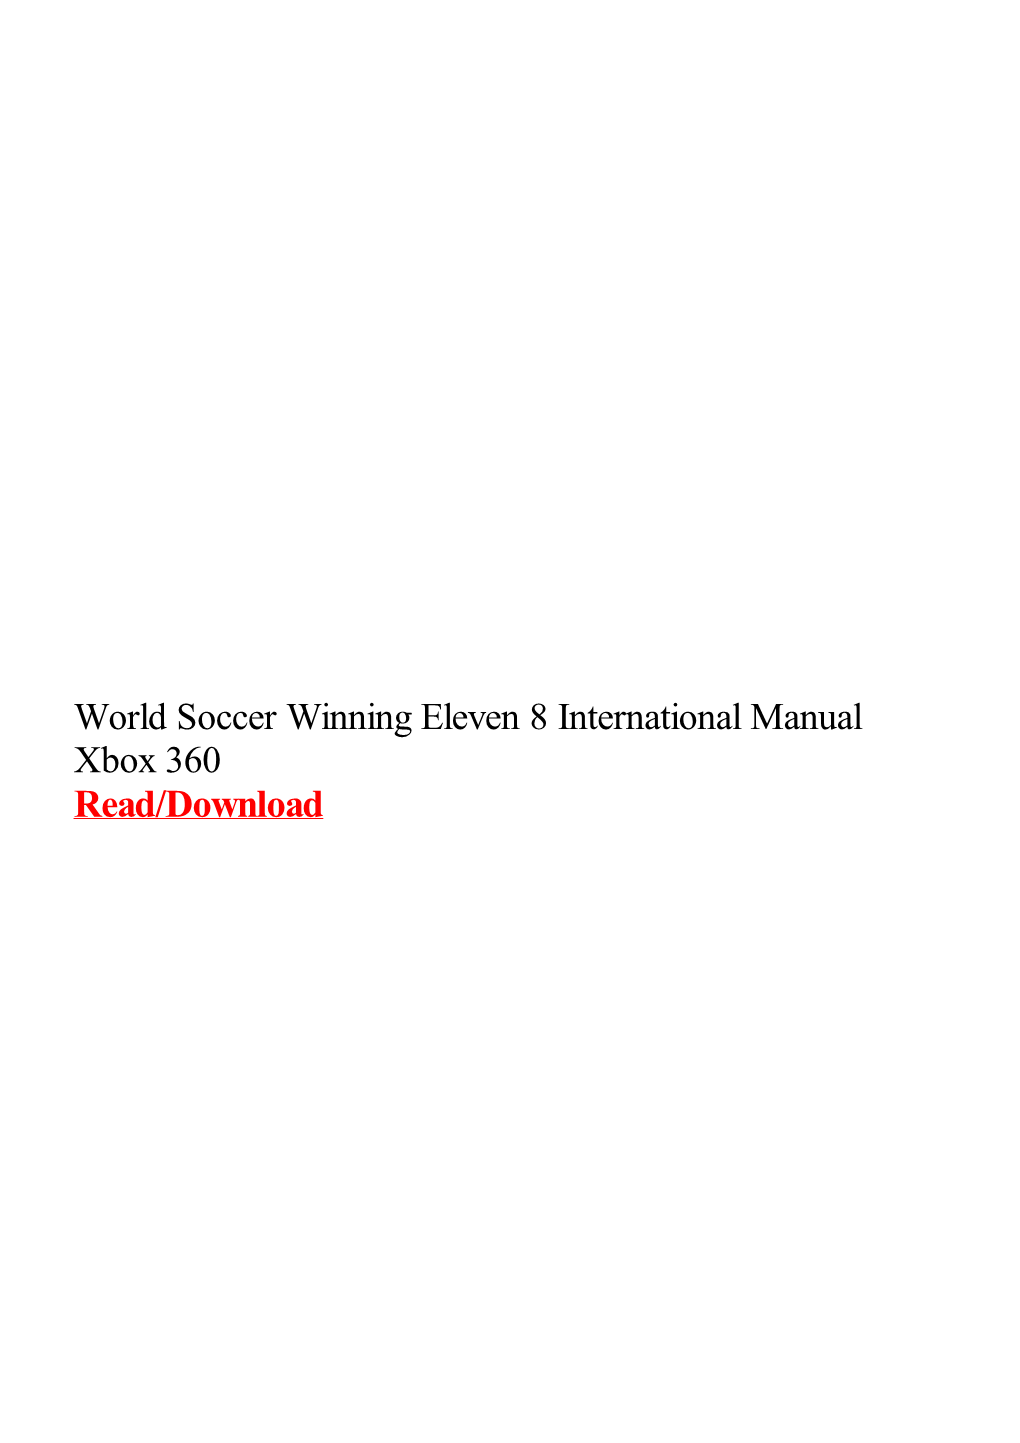 World Soccer Winning Eleven 8 International Manual Xbox 360